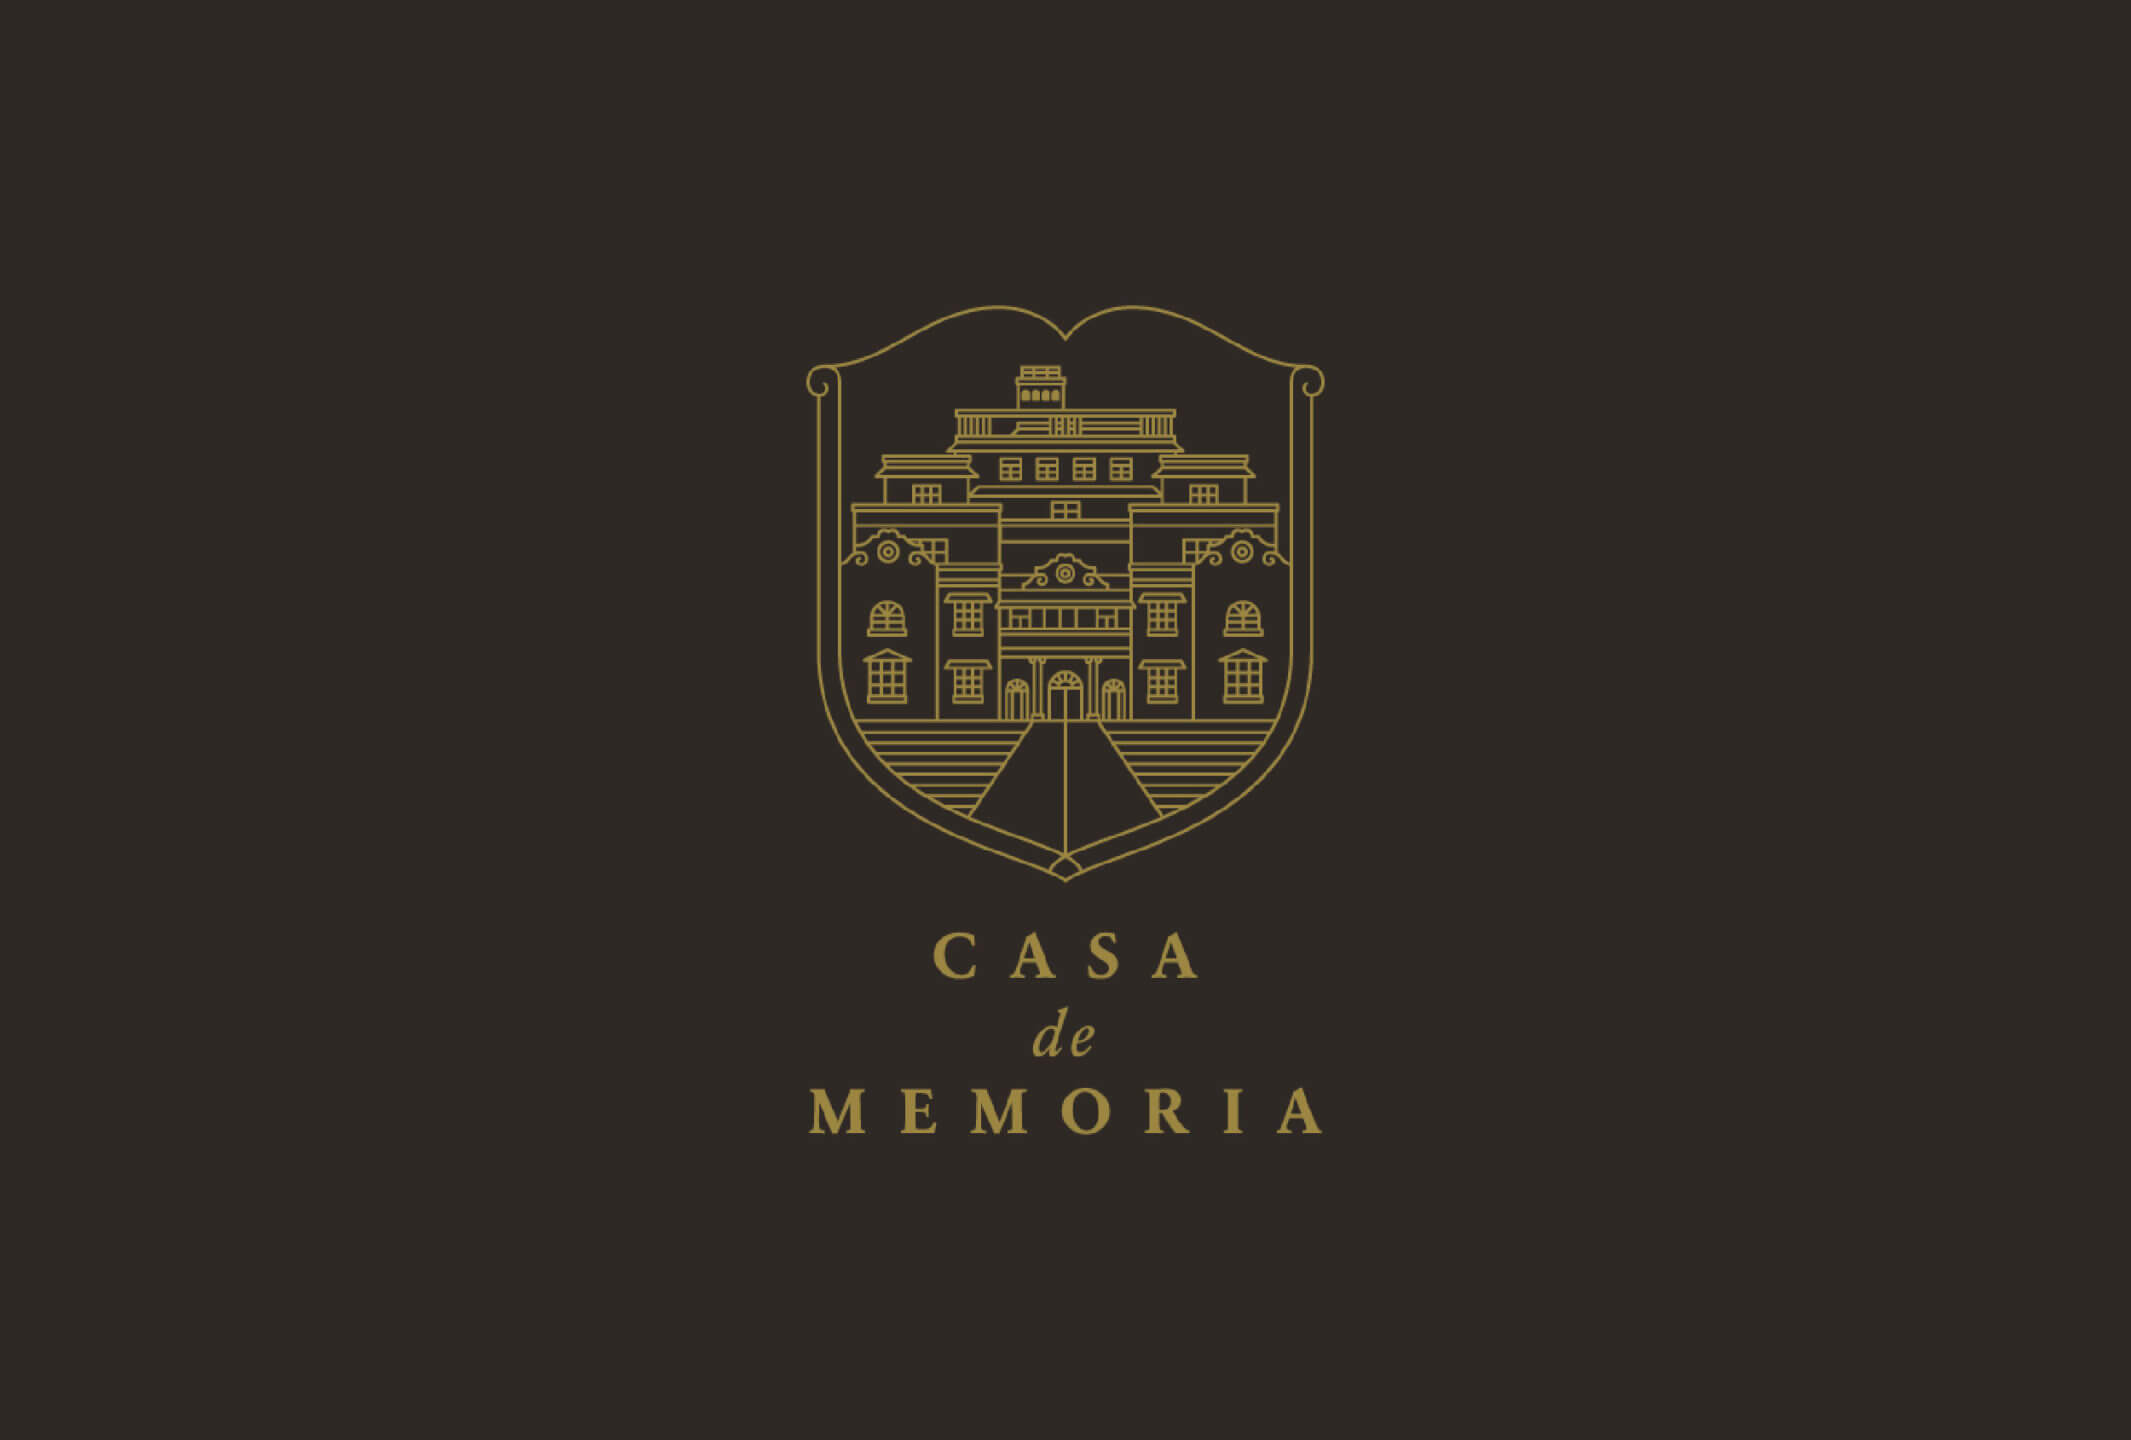 Detailed scenic logo design for auction house brand Casa de Memoria